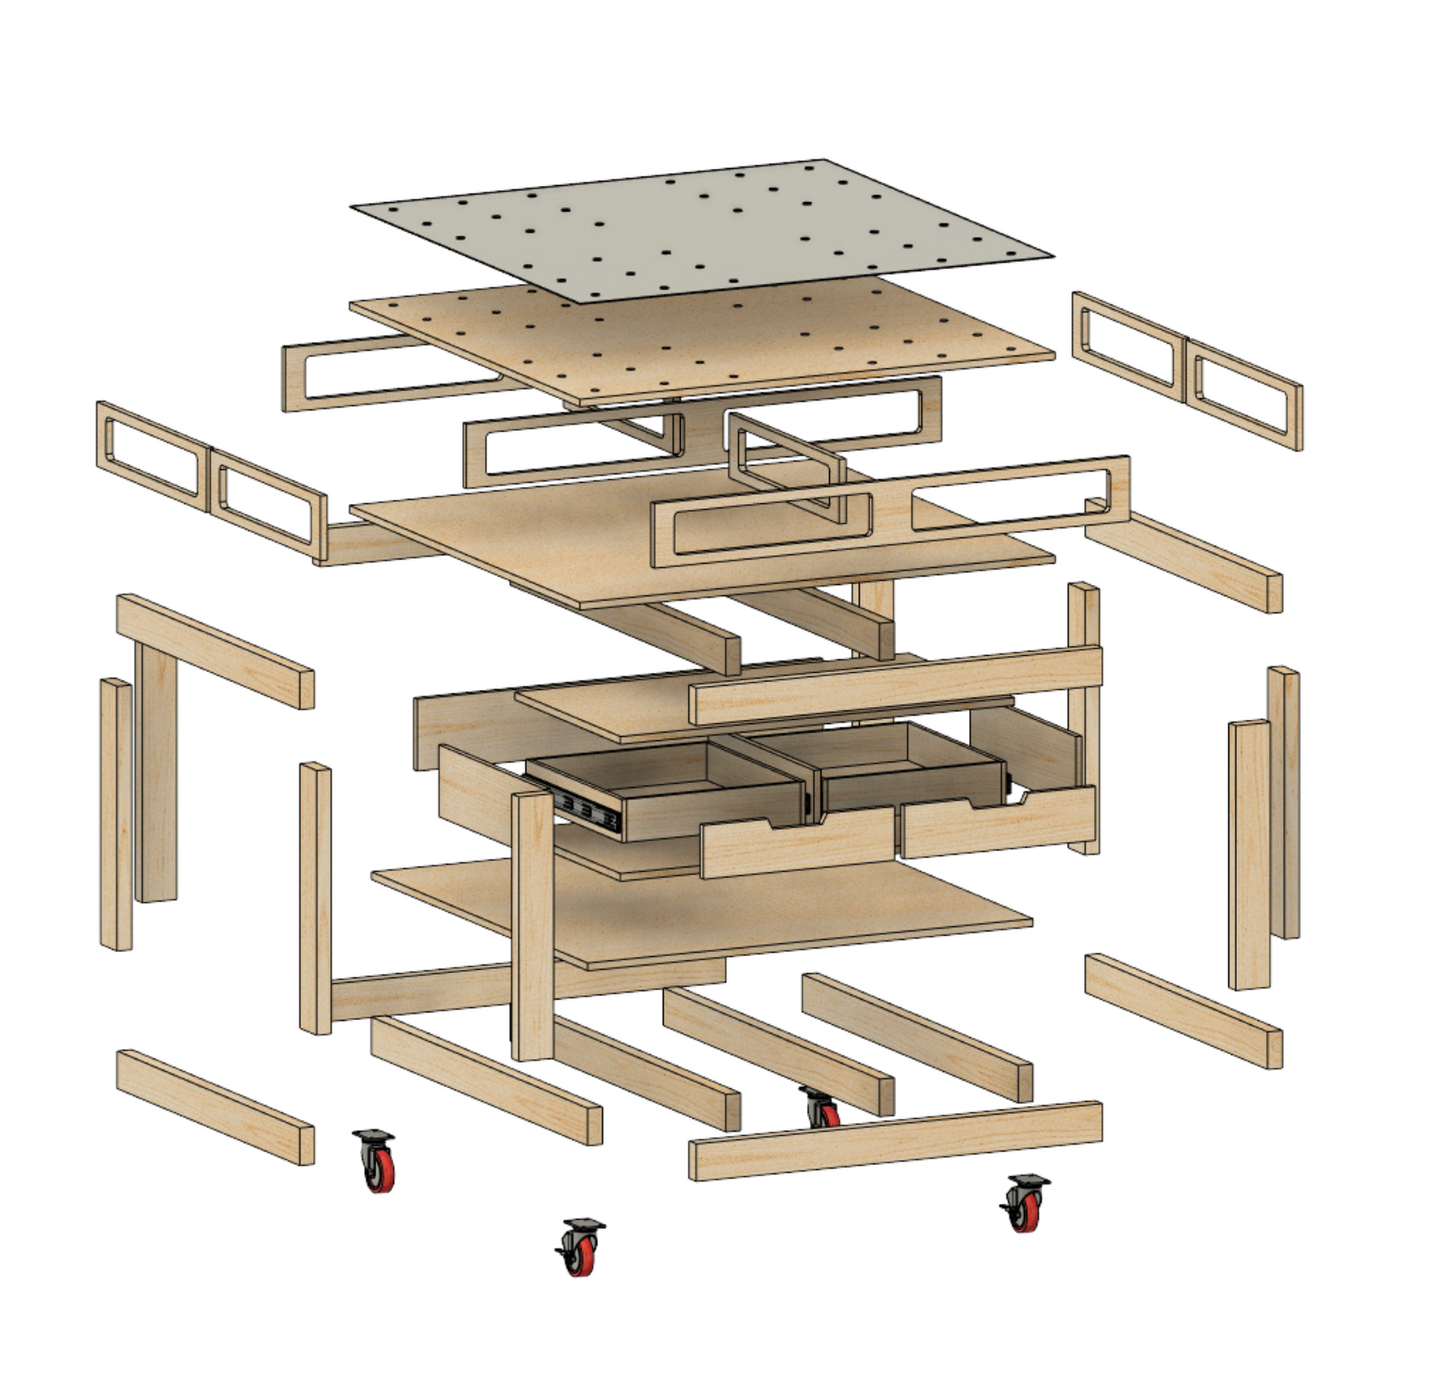 John Malecki - 4'x4' Beginner Workbench with Storage Plan